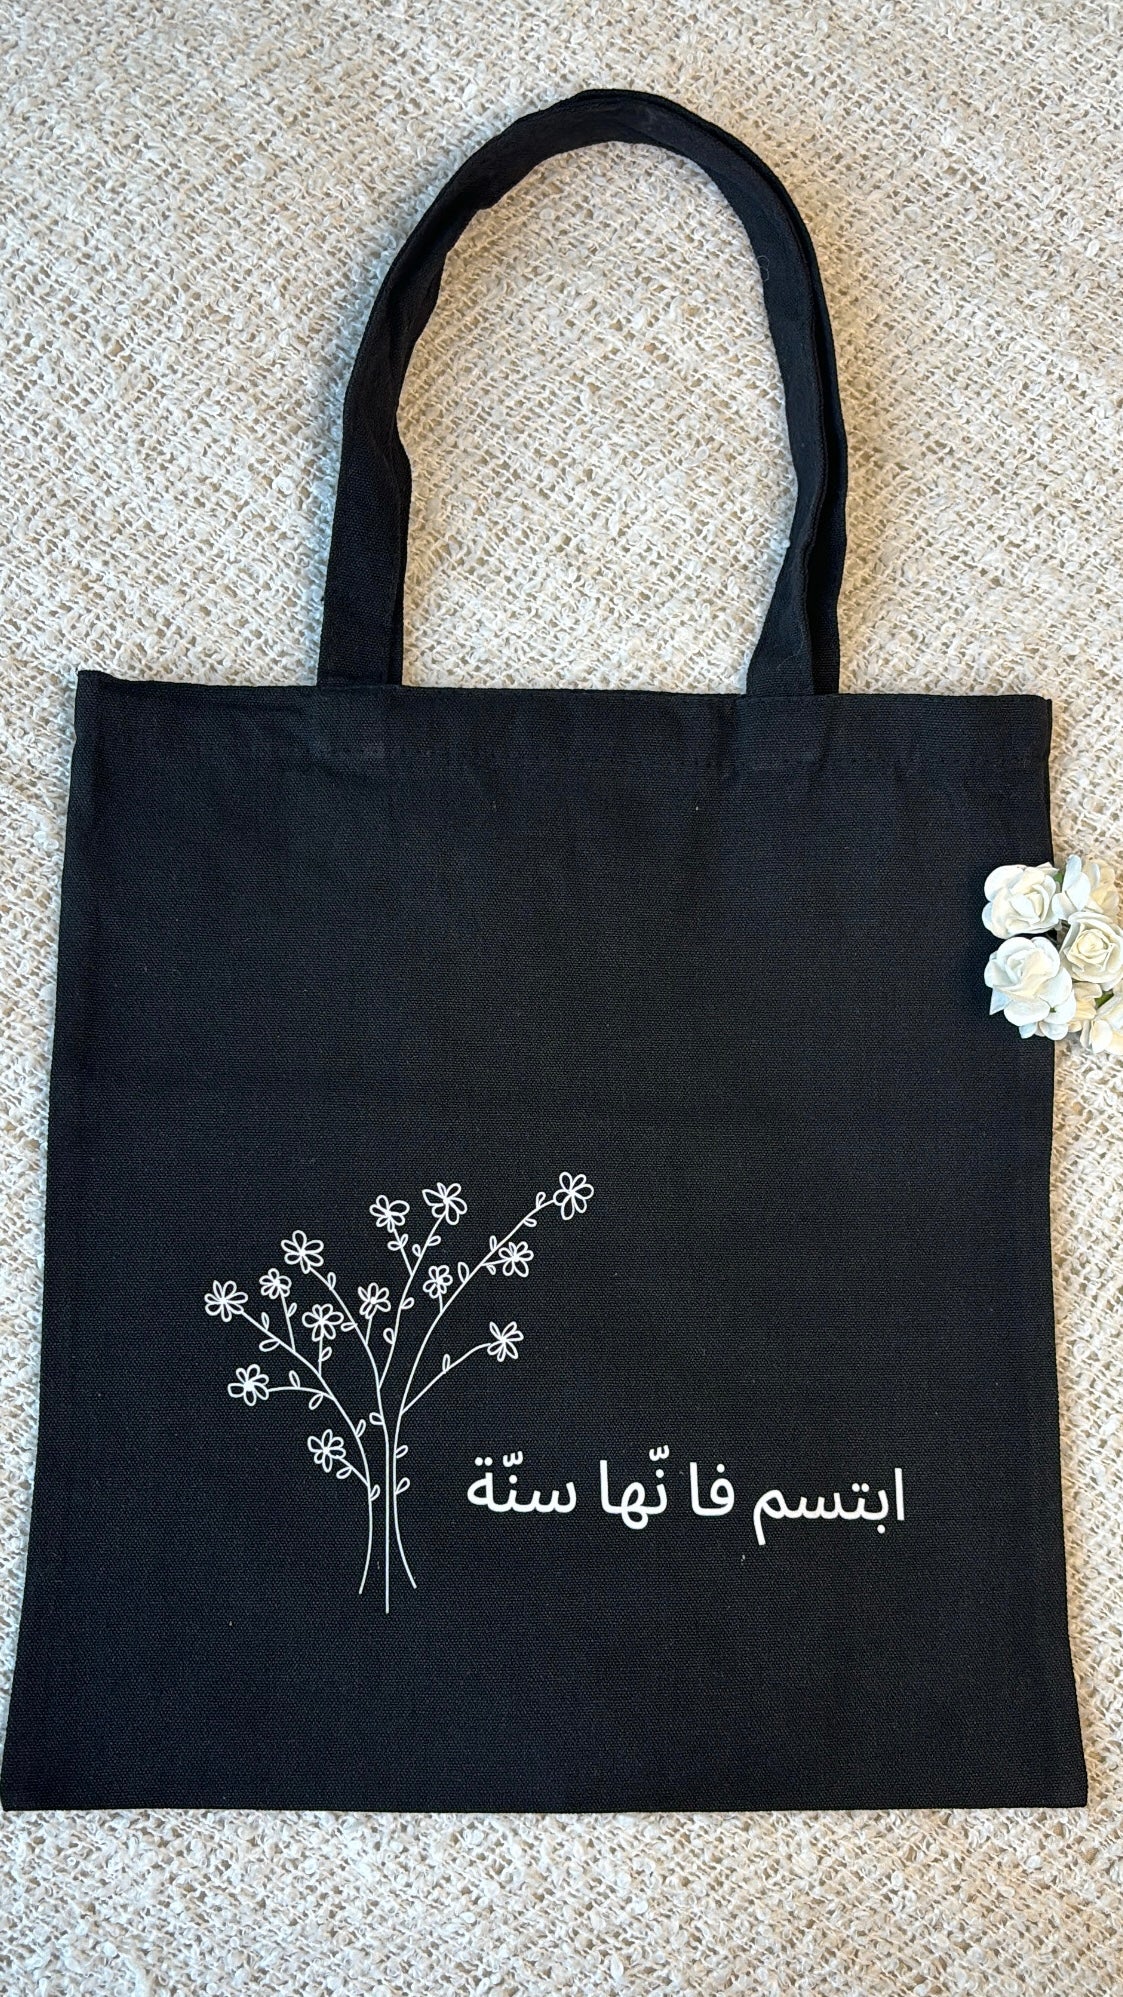 "Smile, it's sunnah" Tote Bag